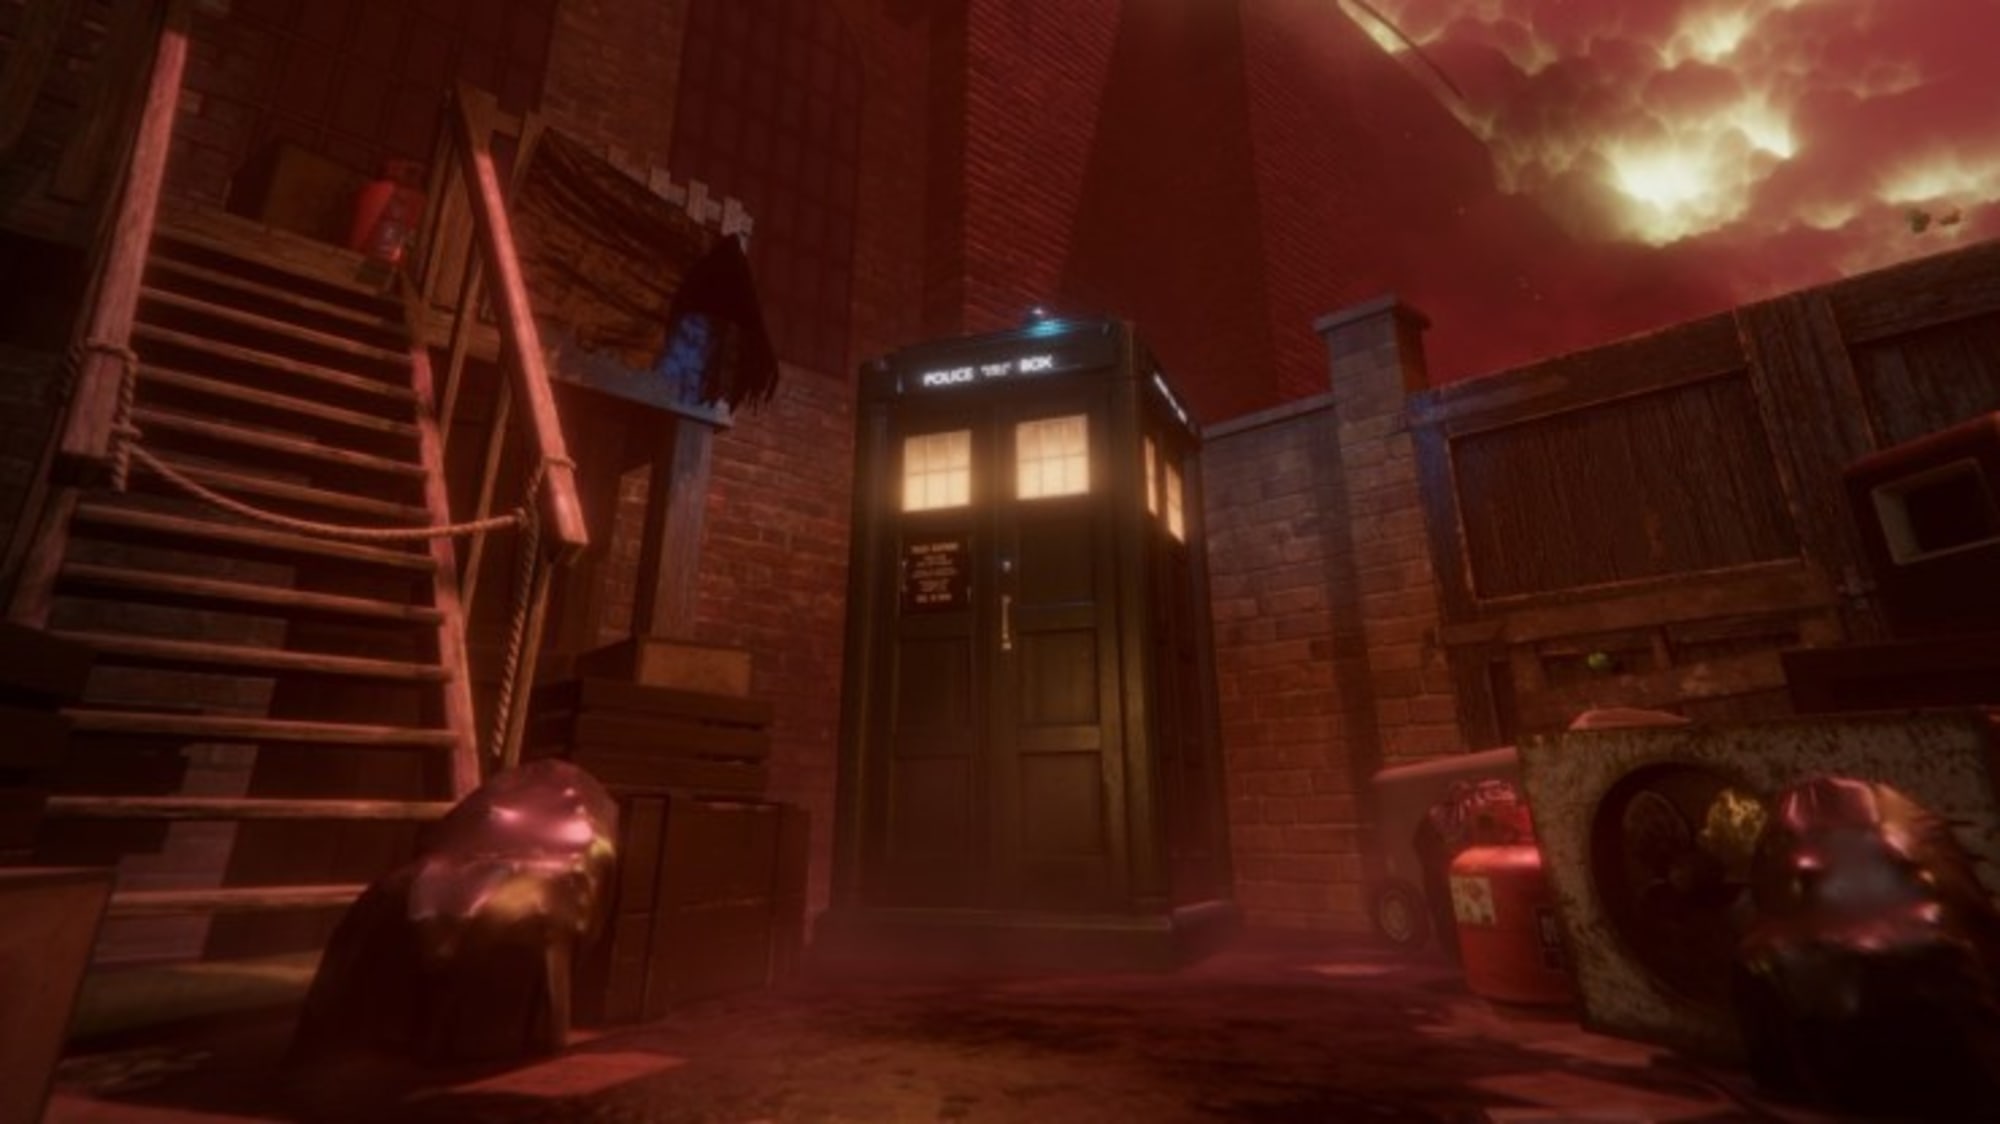 kom over Afslut i går Don't Blink! Doctor Who: The Edge of Time coming to VR this September